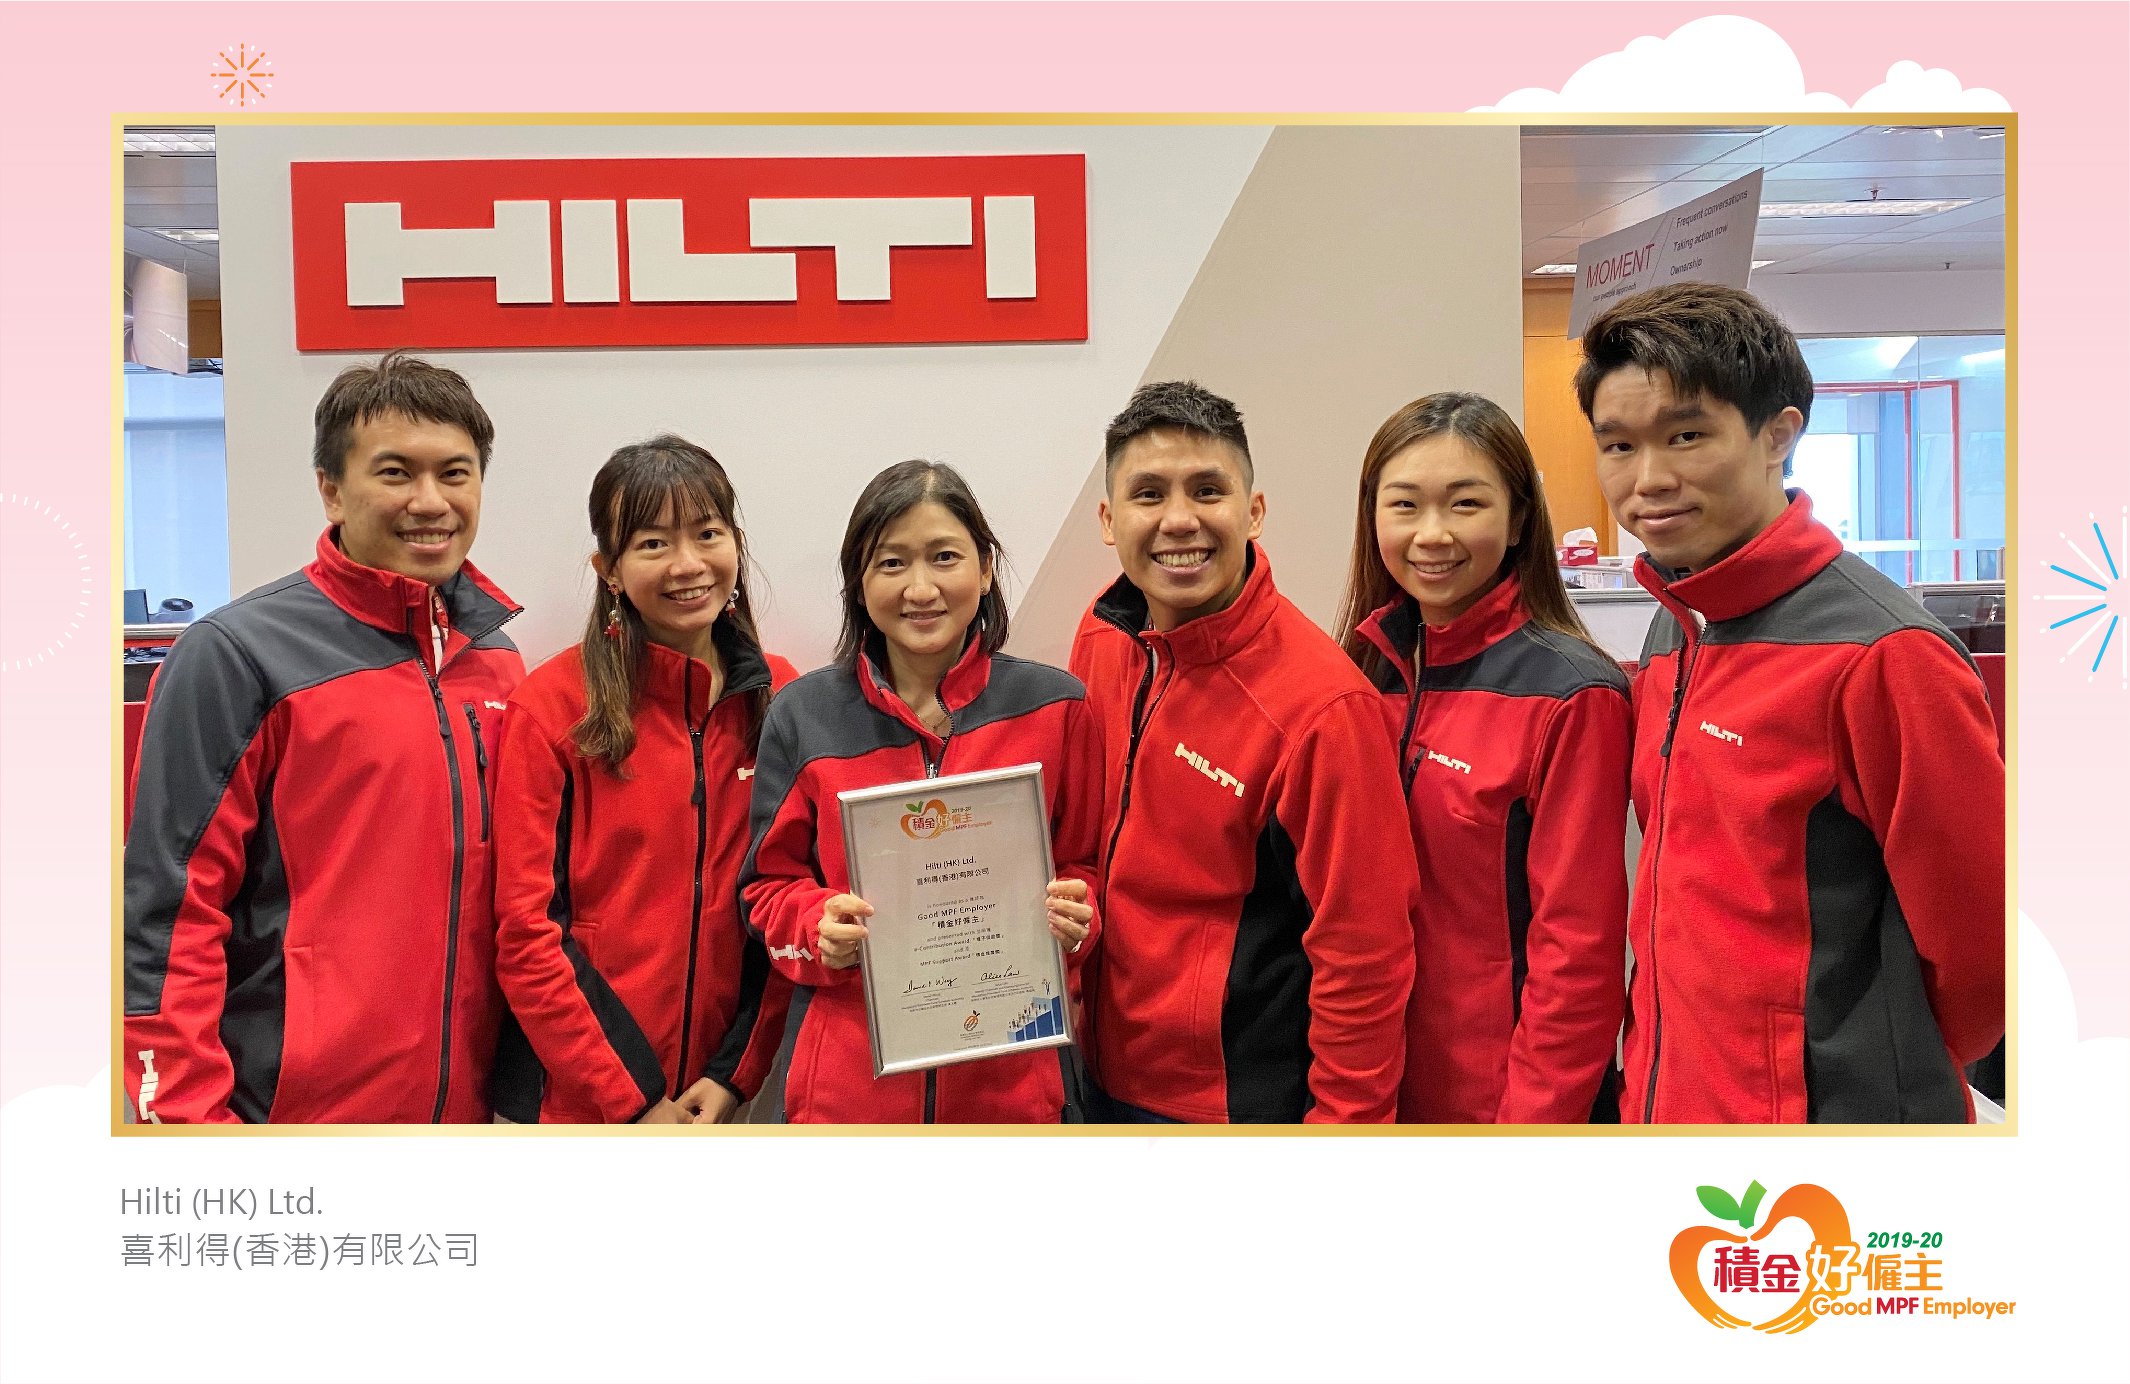 Hilti (HK) Ltd. 喜利得(香港)有限公司